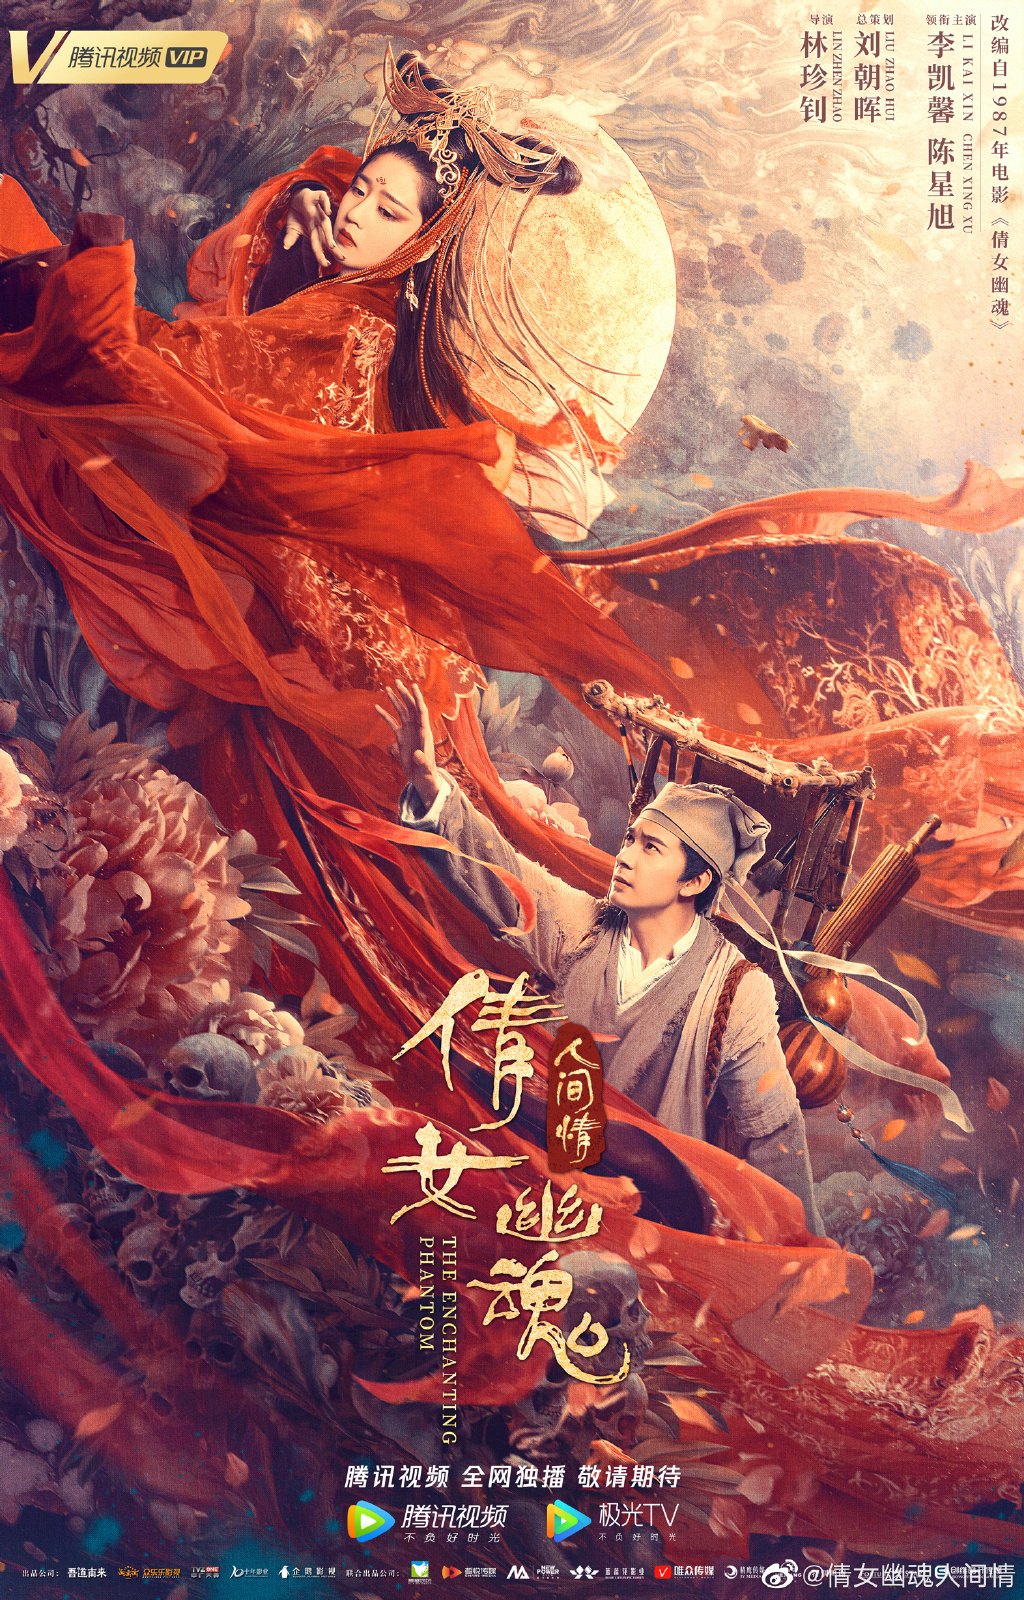 Banner Phim Tân Thiện Nữ U Hồn (The Enchanting Phantom)